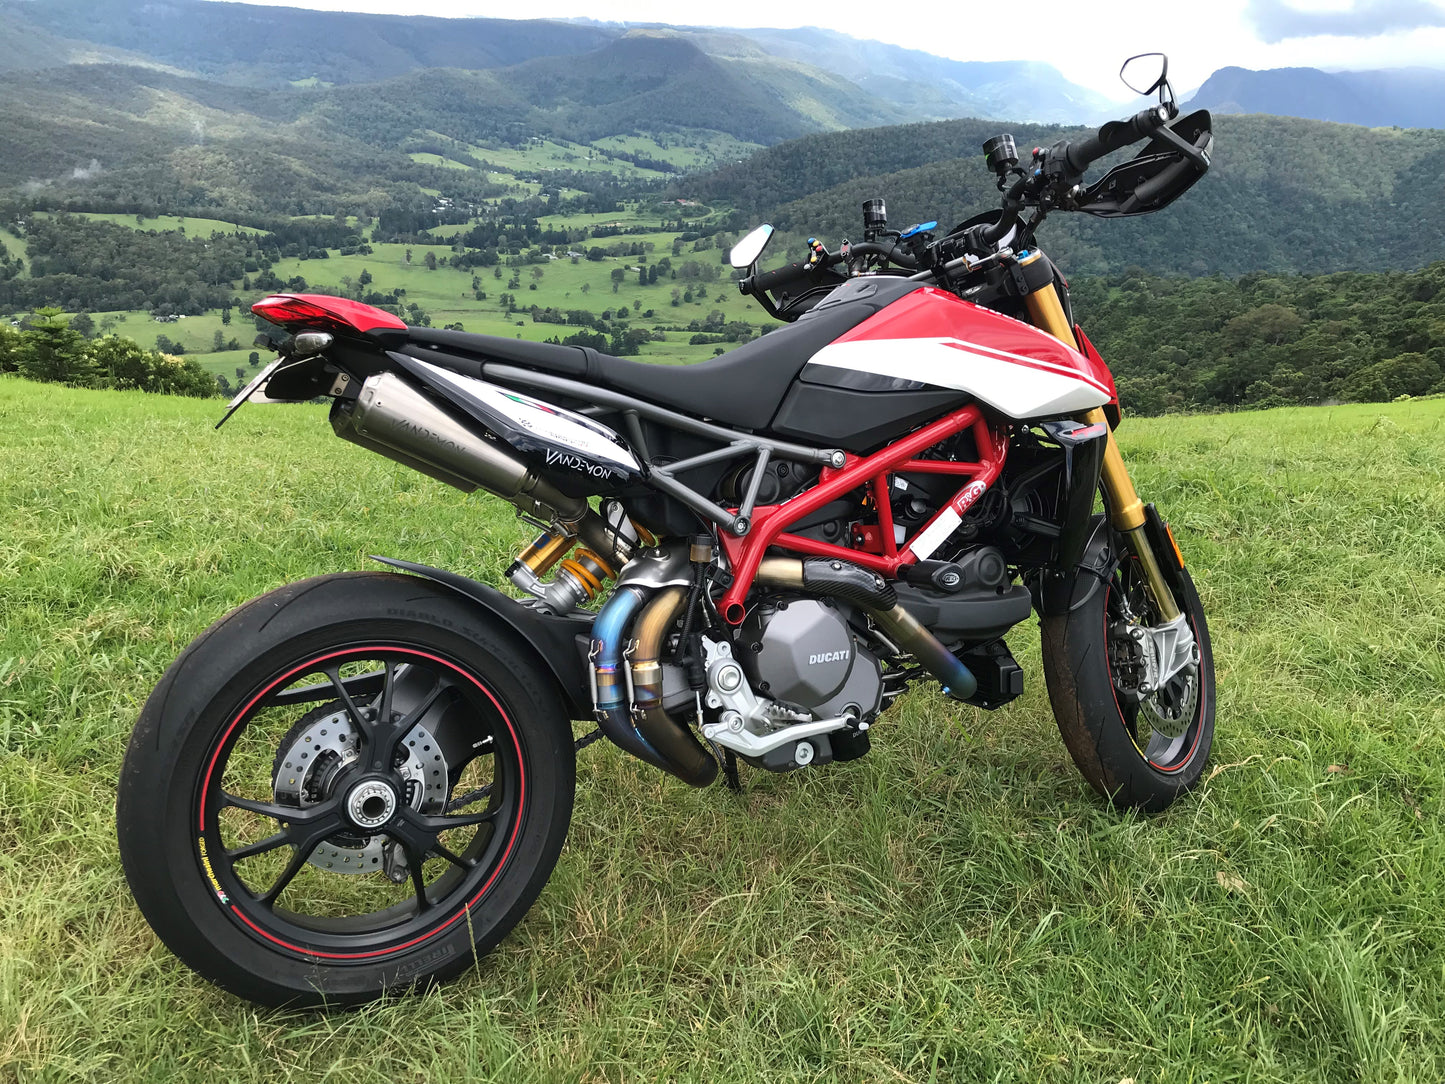 Full Titanium Exhaust System  on Ducati red bike